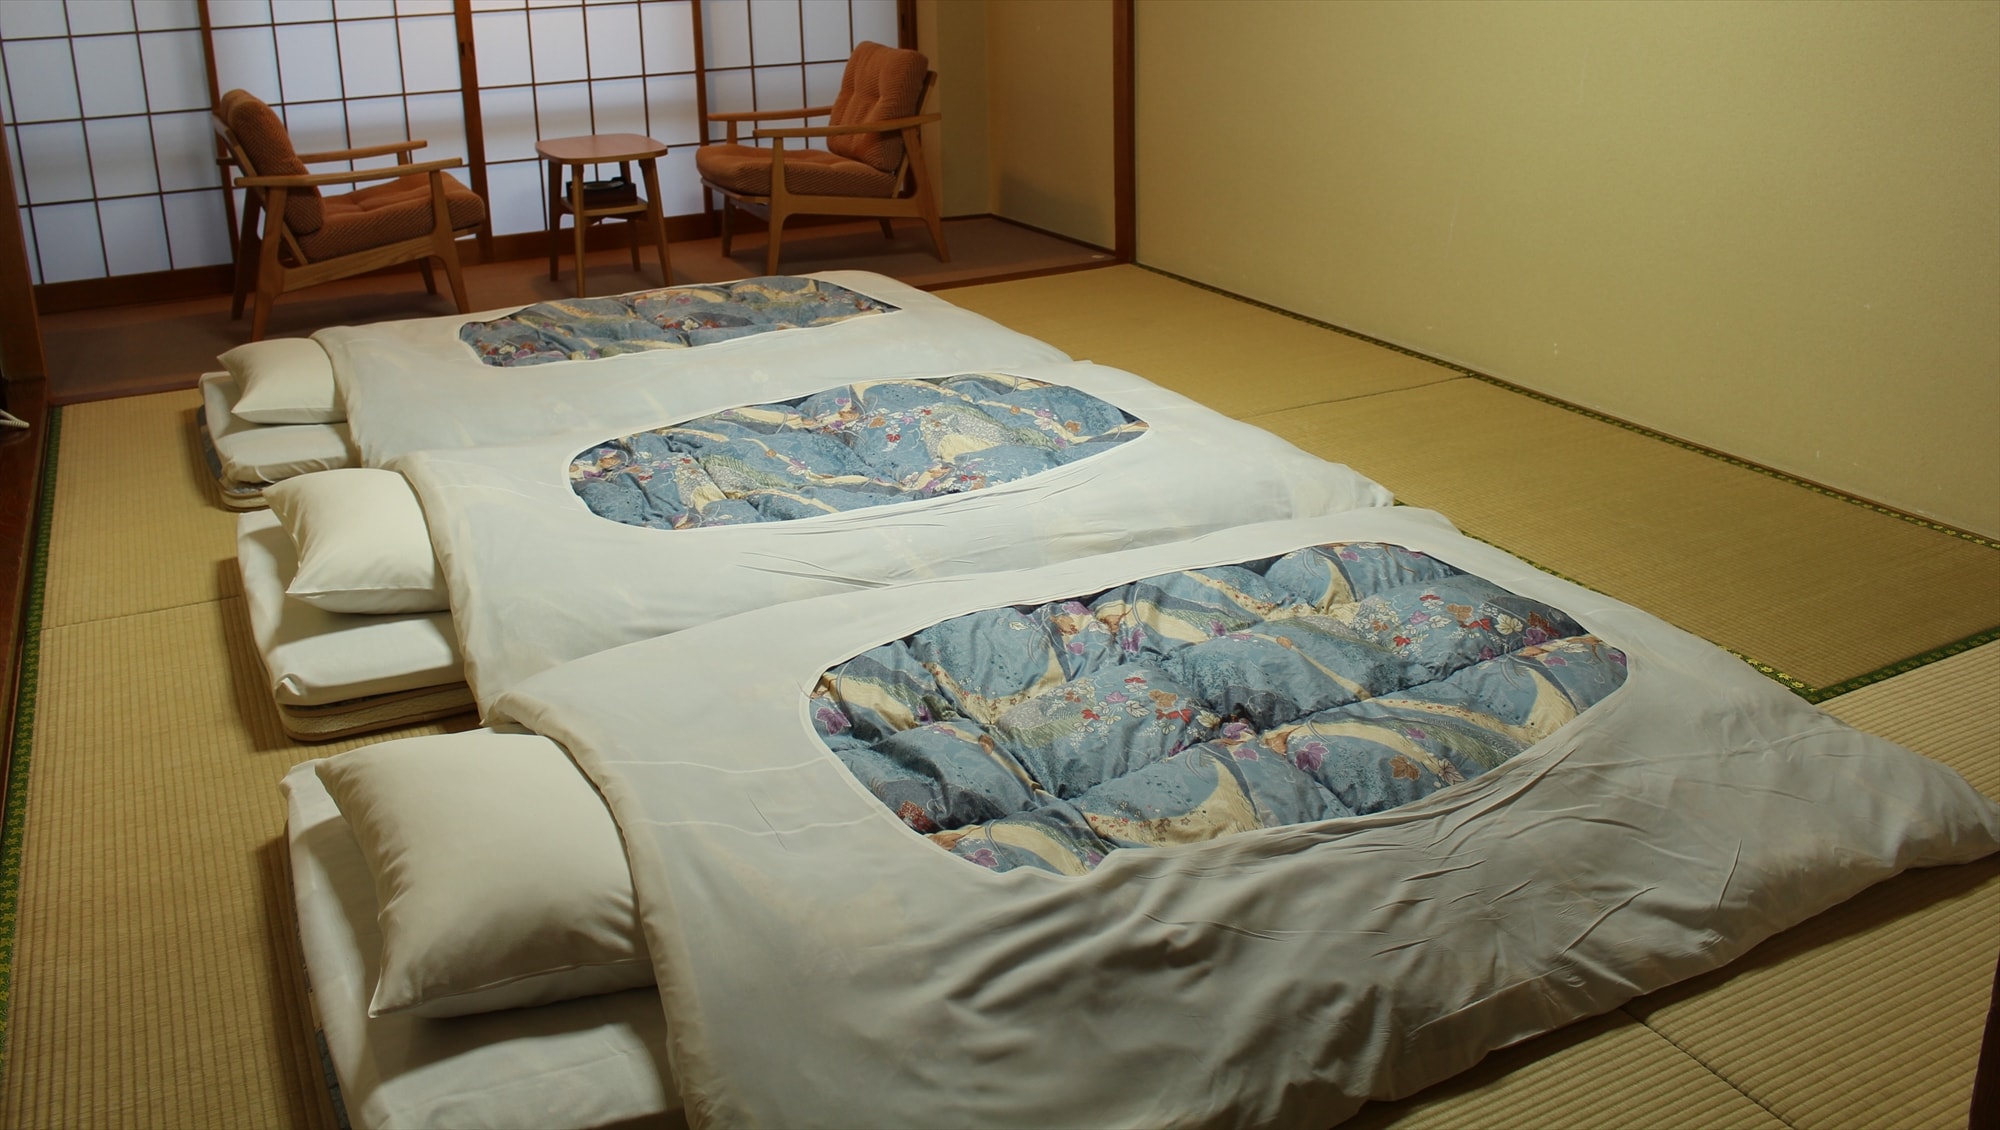 Guest room "futon"